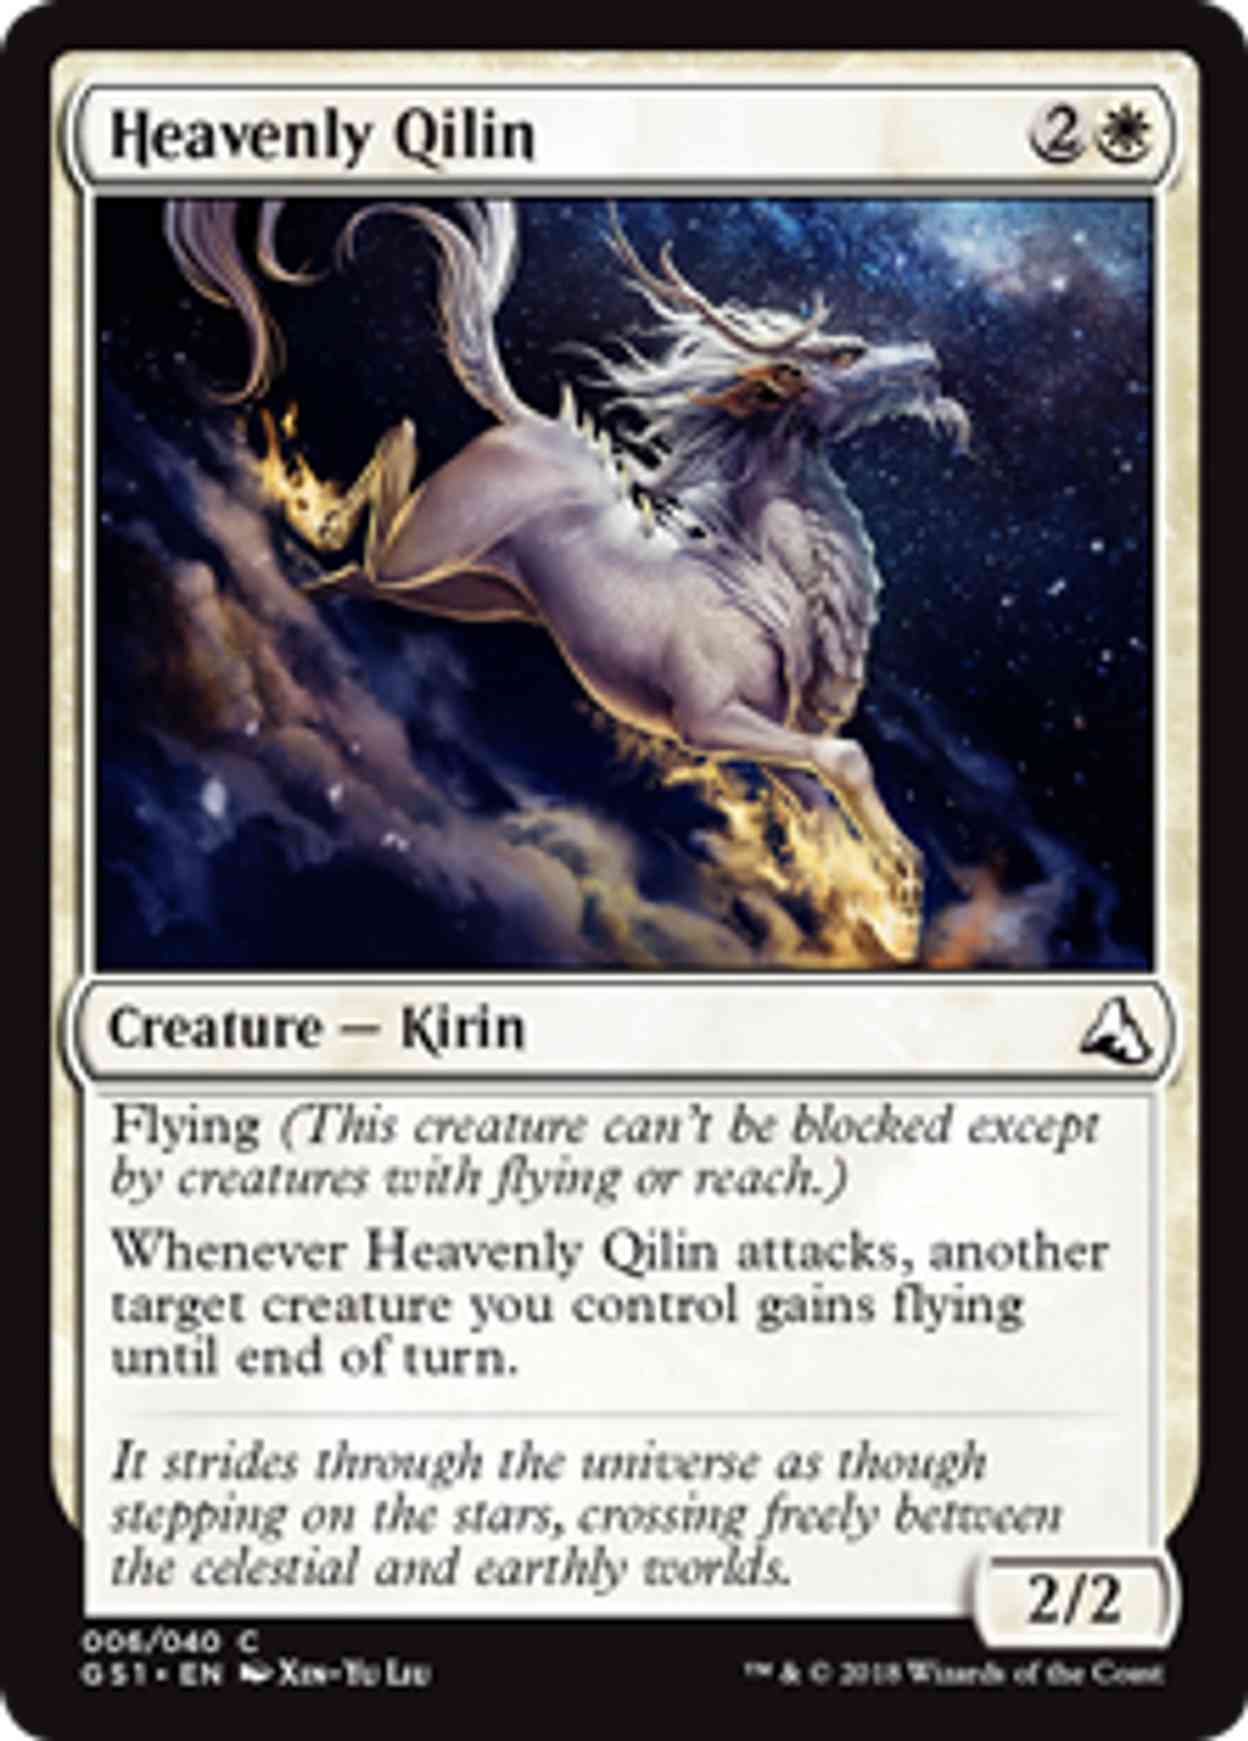 Heavenly Qilin magic card front